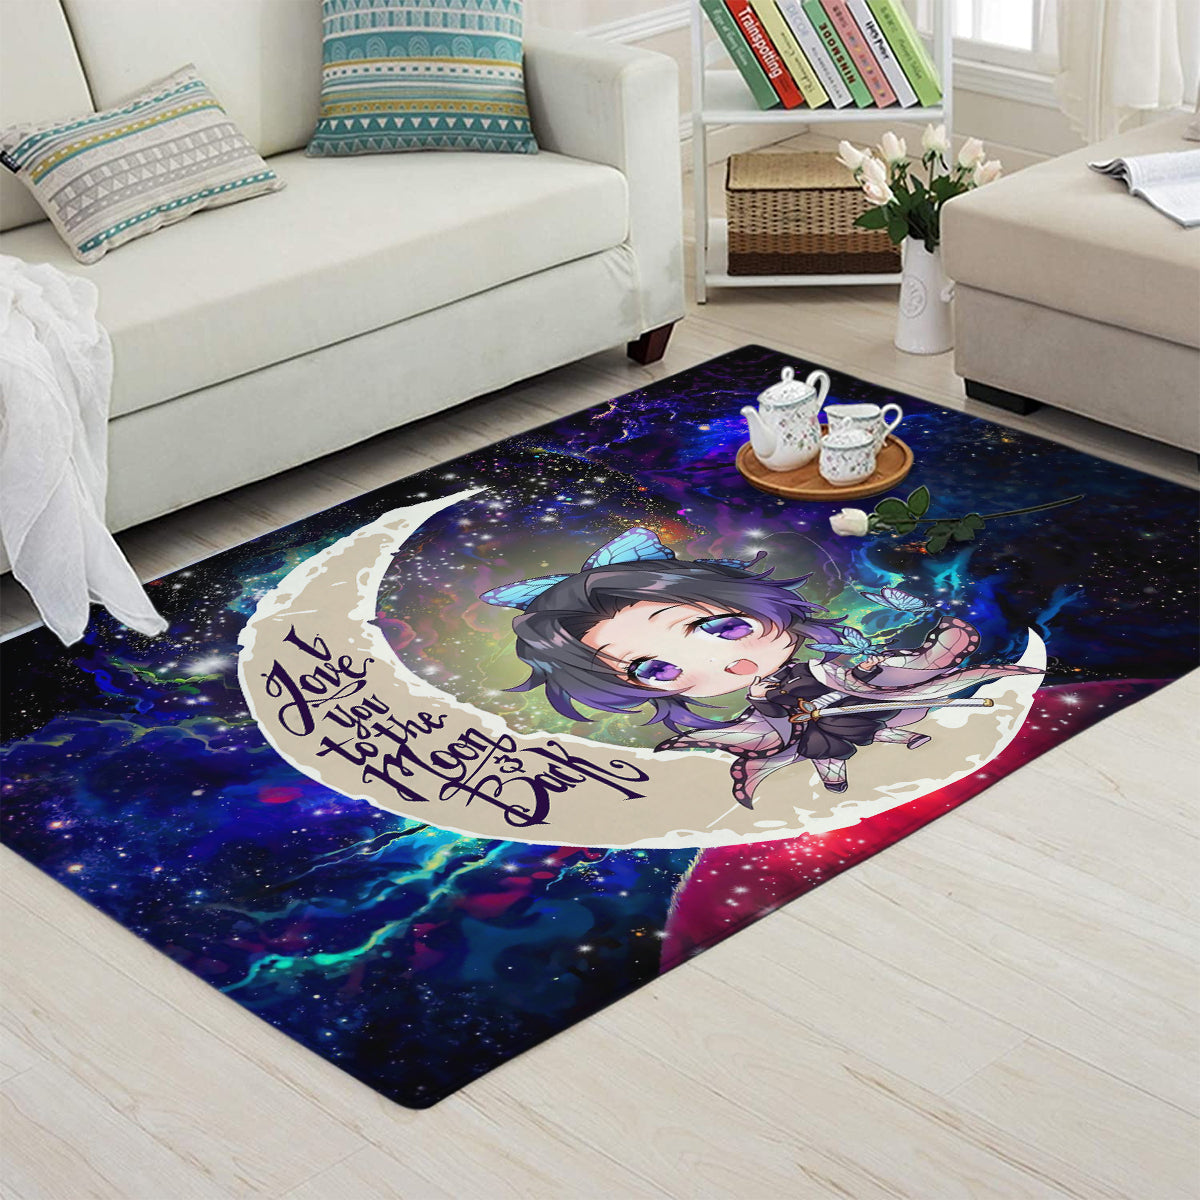 Shinobu demon slayer Love You To The Moon Carpet Rug Home Room Decor